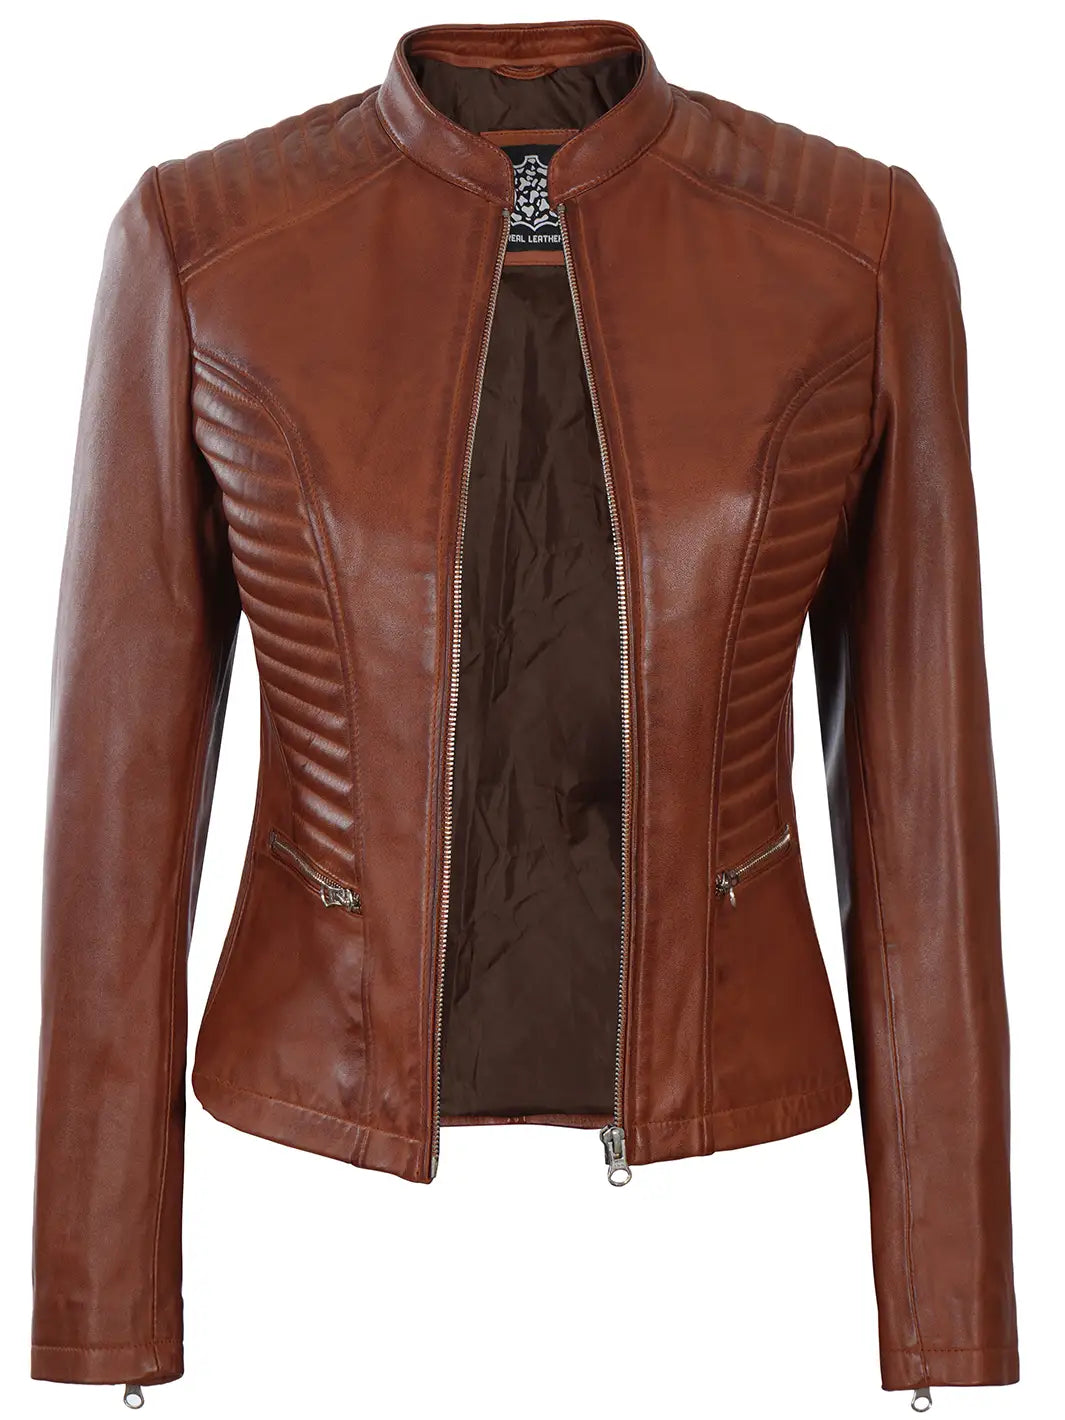 Cafe racer women leather jacket